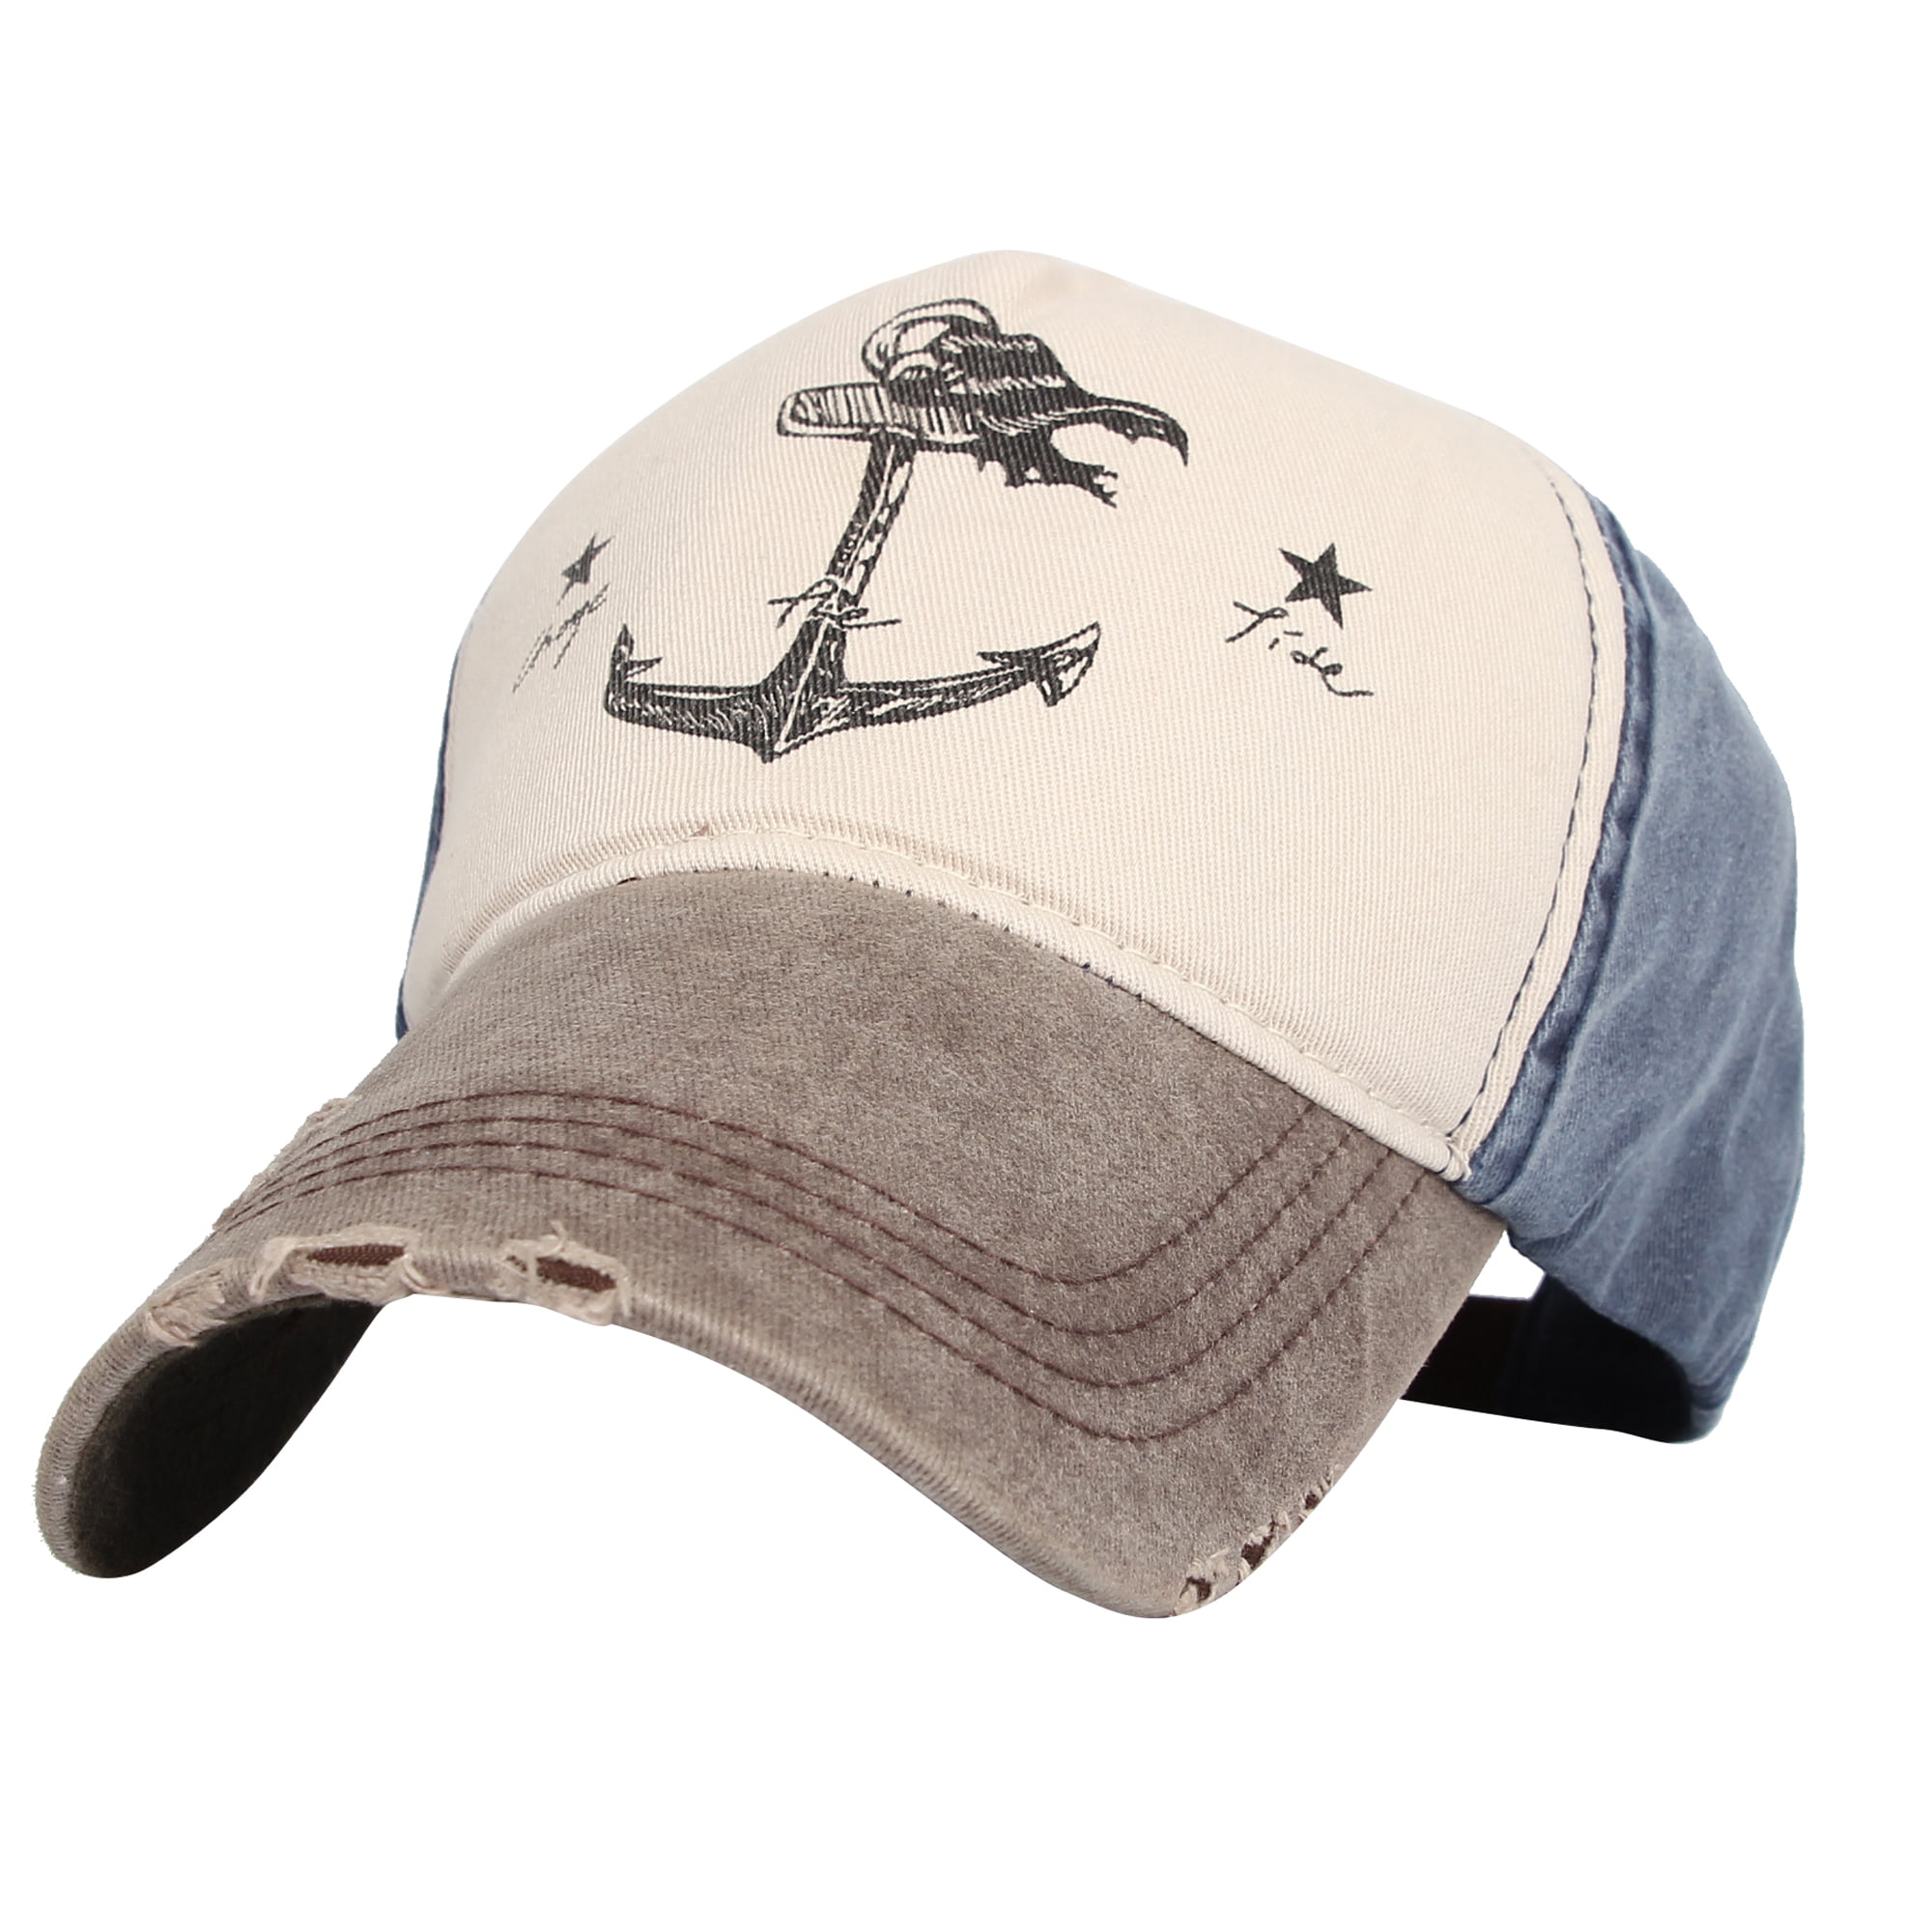 Pirate Bread Classic Adjustable Cotton Baseball Caps Trucker Driver Hat Outdoor Cap Black 